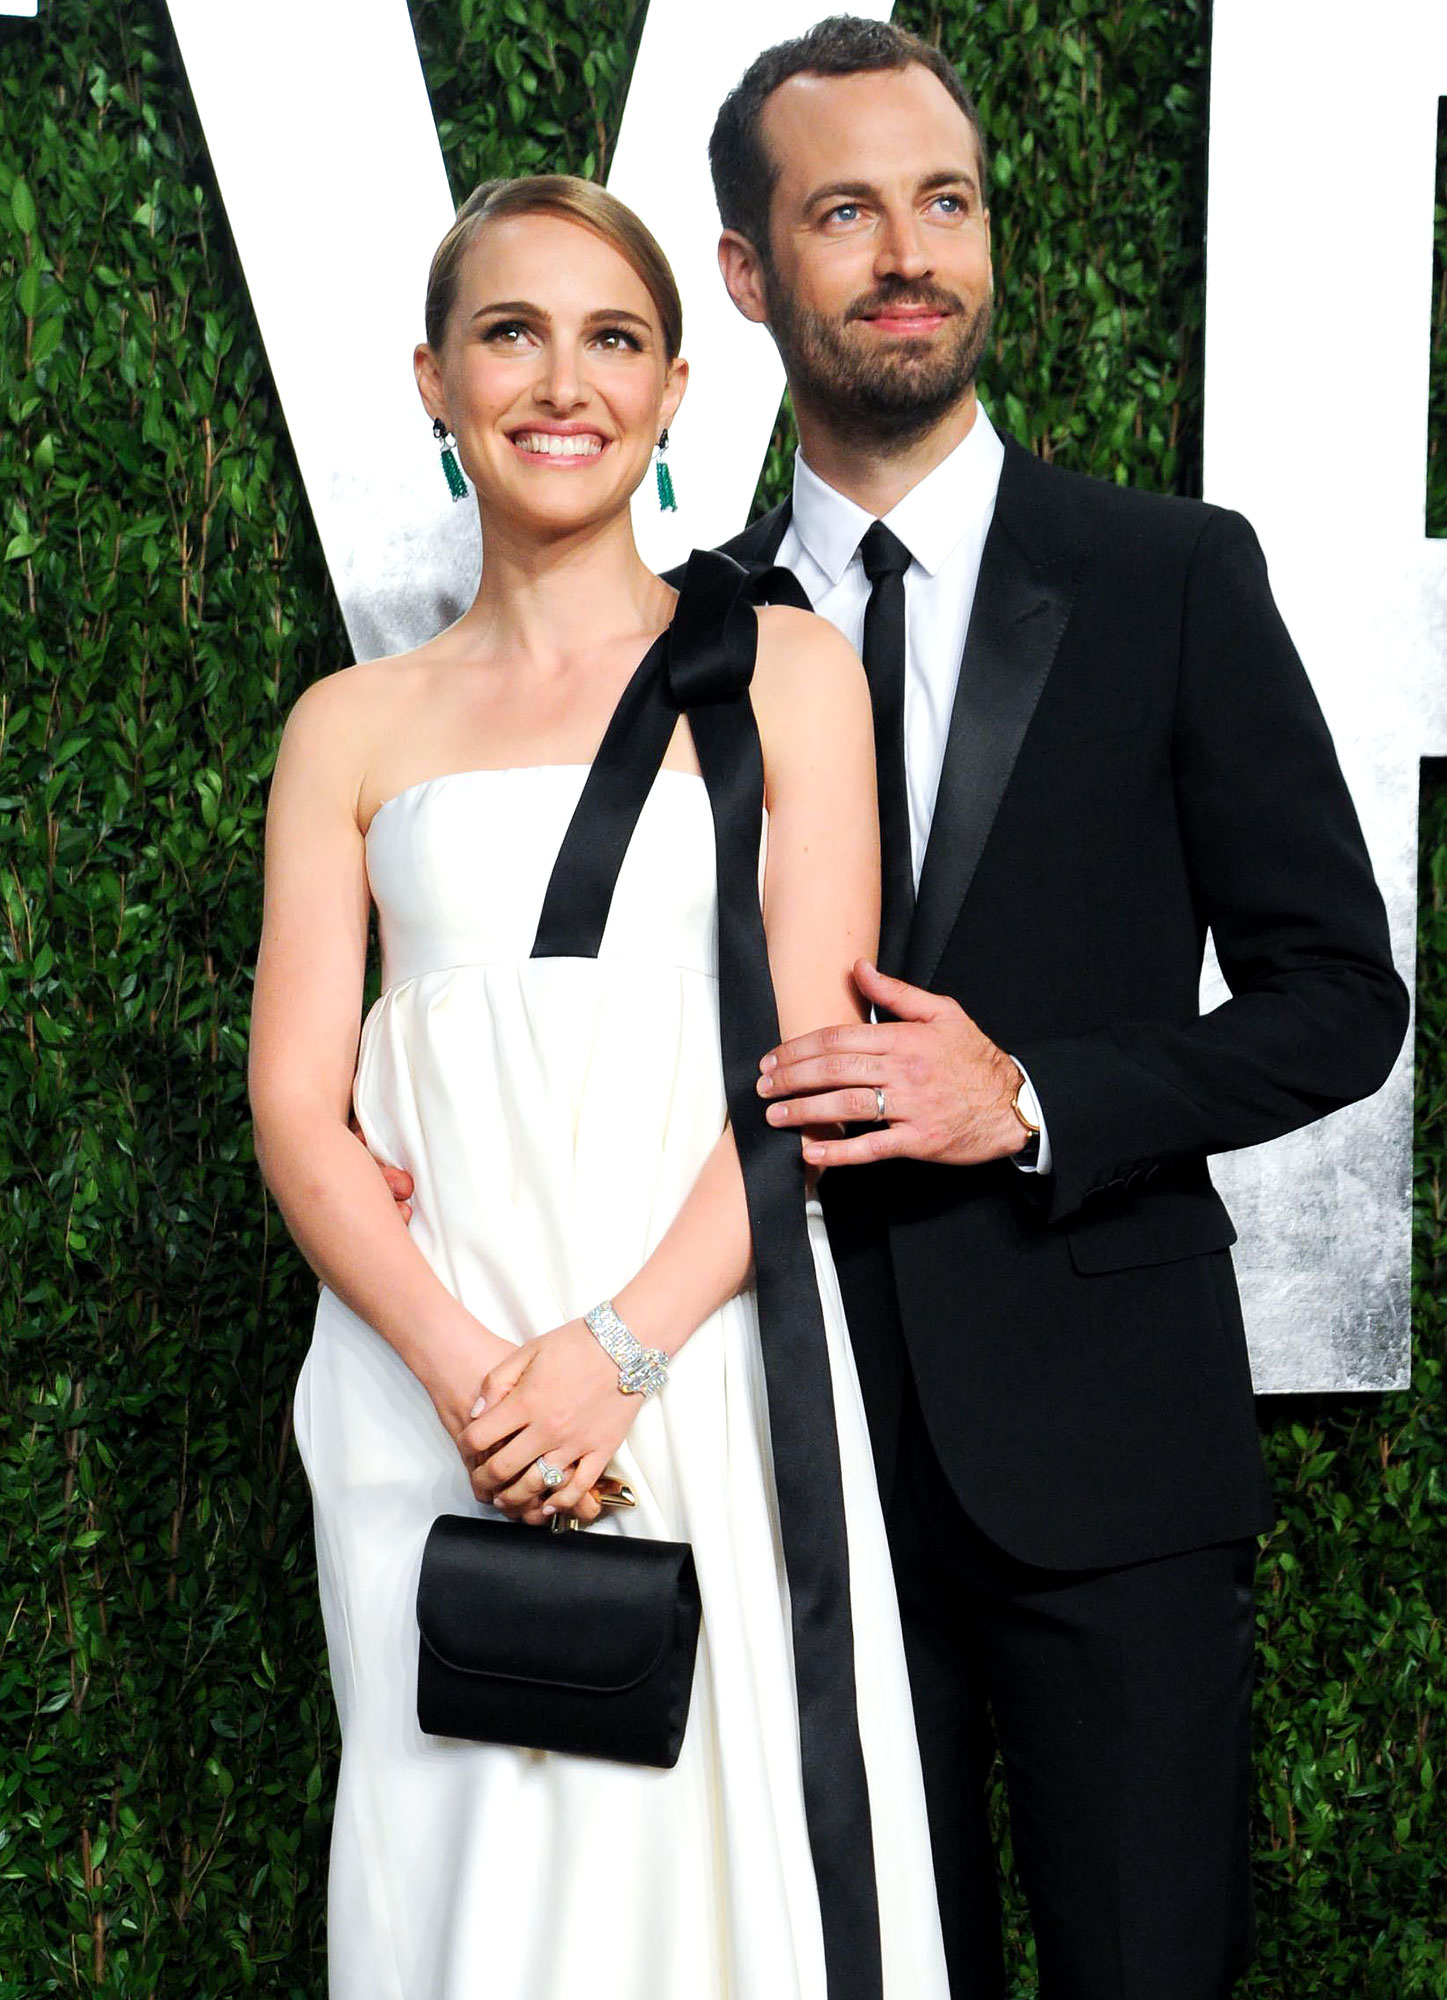 Natalie Portman Rocks Wedding Ring Amid Husband Affair Rumors picture pic